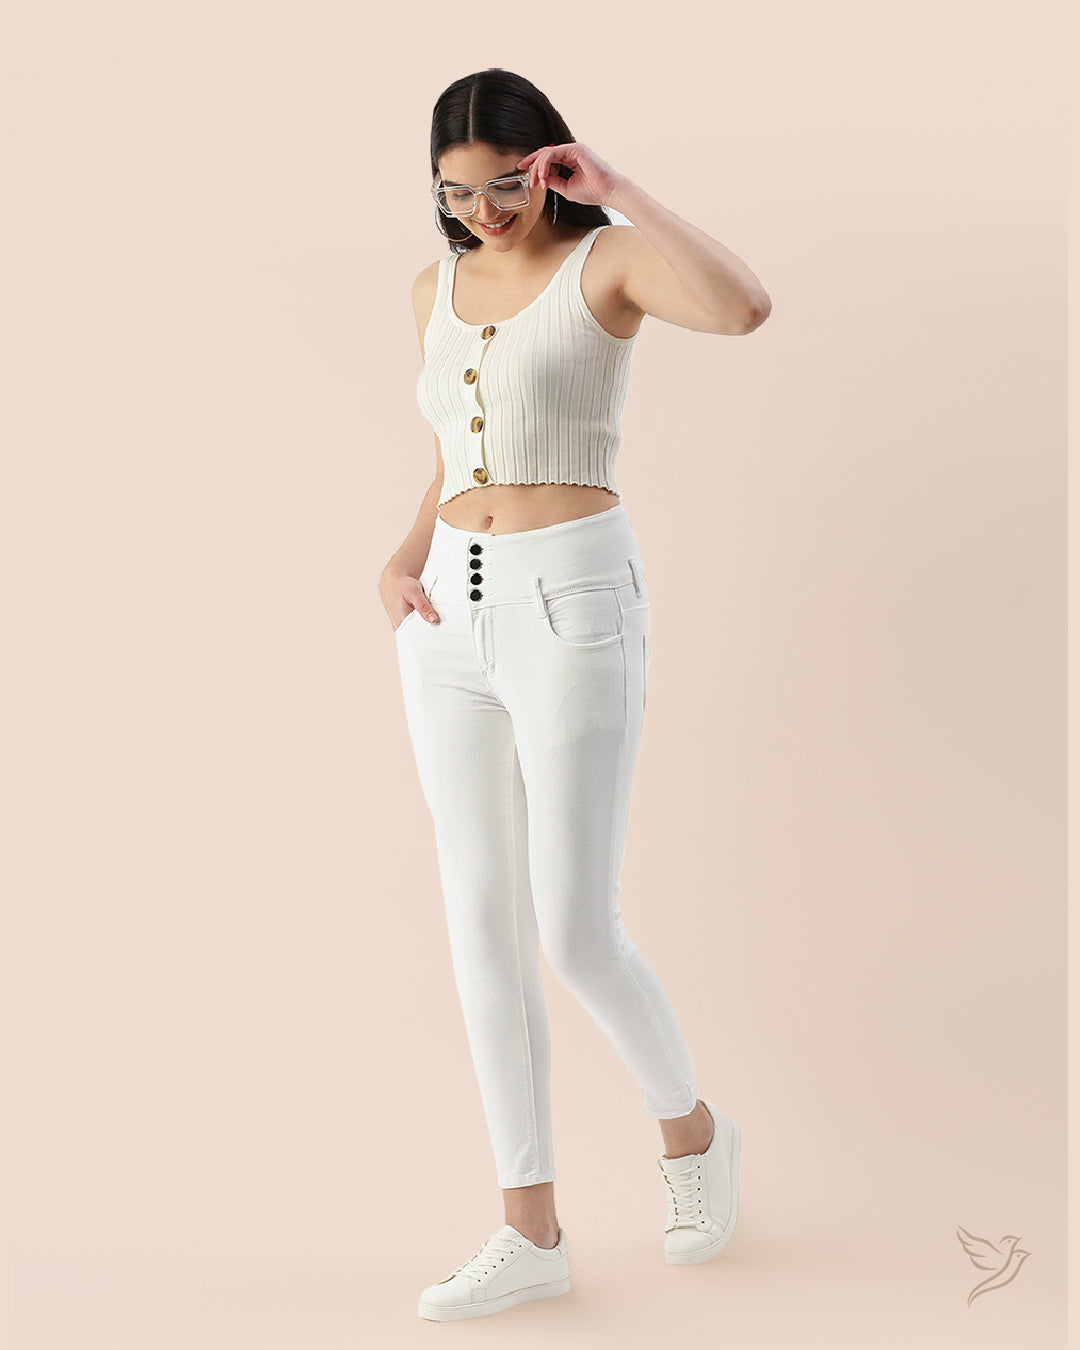 Stylish Pearl White Women High Waist Denim Jeans